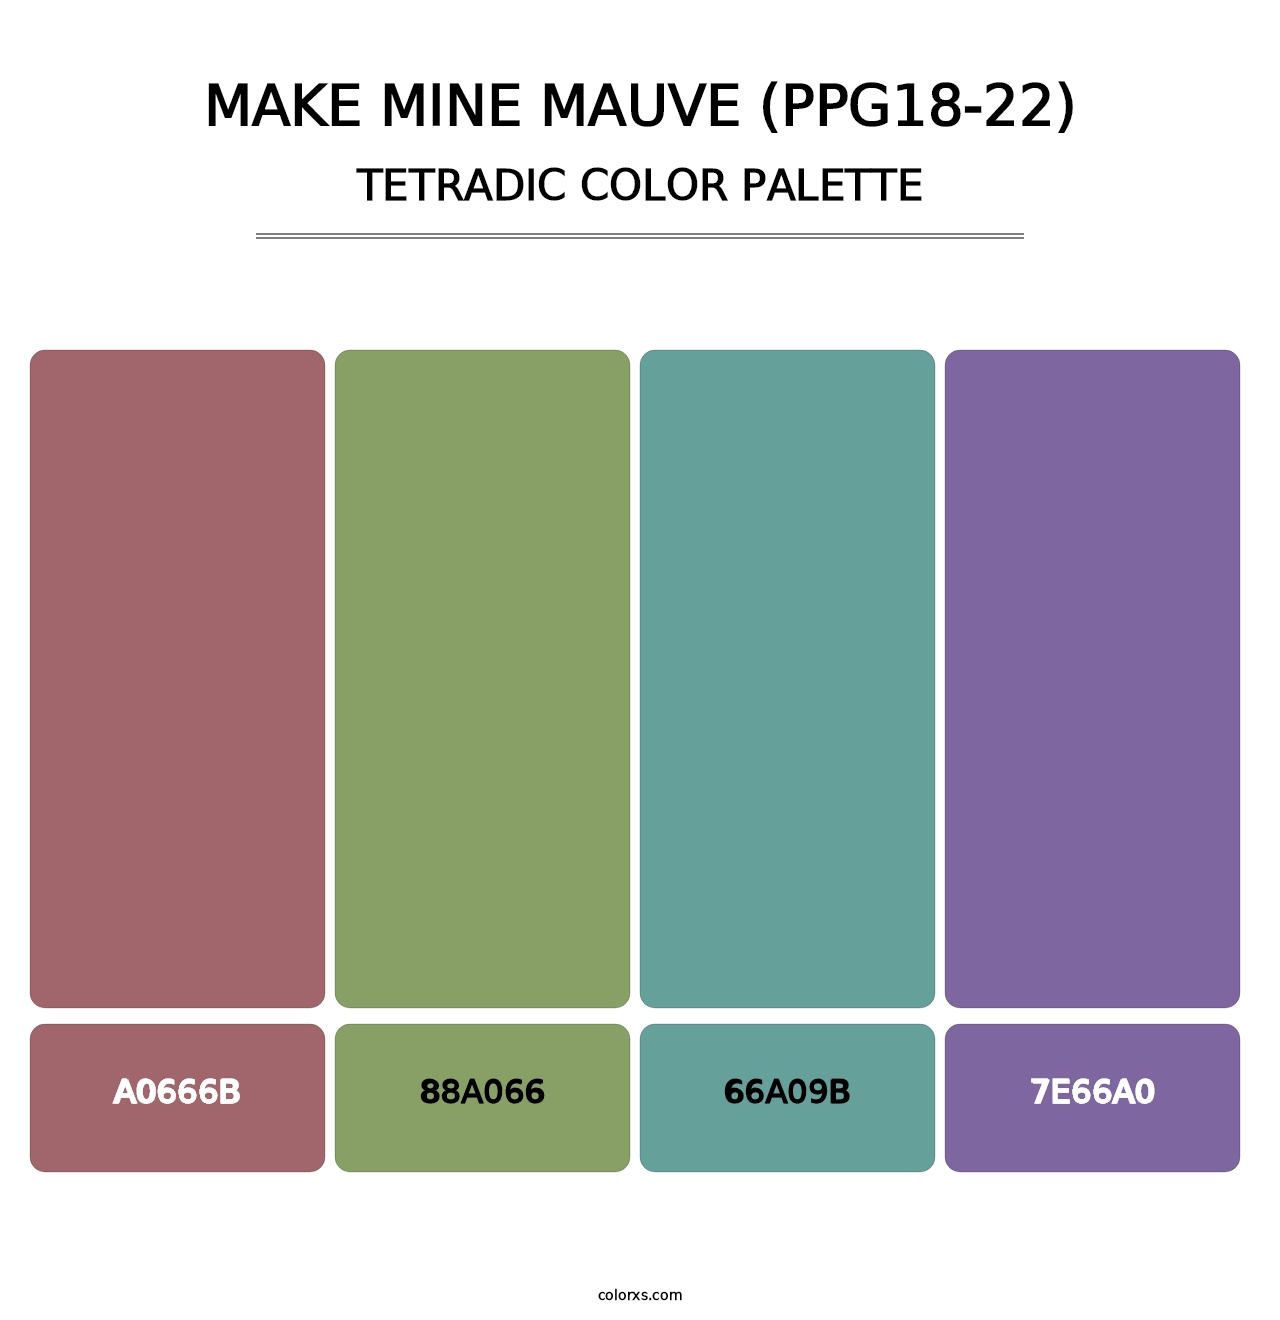 Make Mine Mauve (PPG18-22) - Tetradic Color Palette